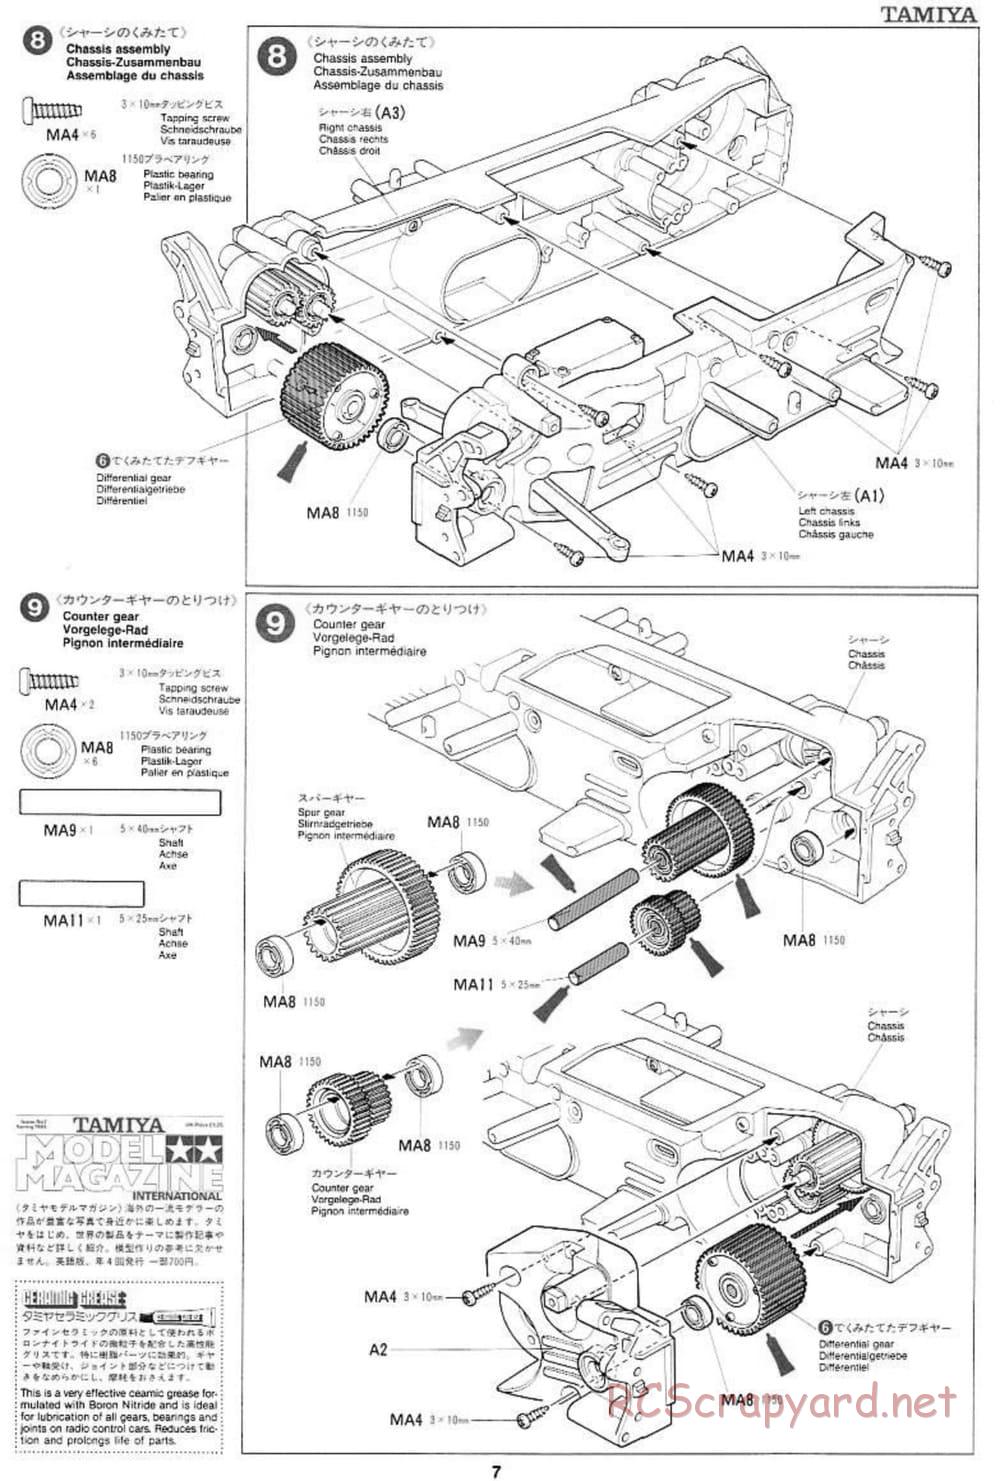 Tamiya - Ford Escort WRC - TL-01 Chassis - Manual - Page 7